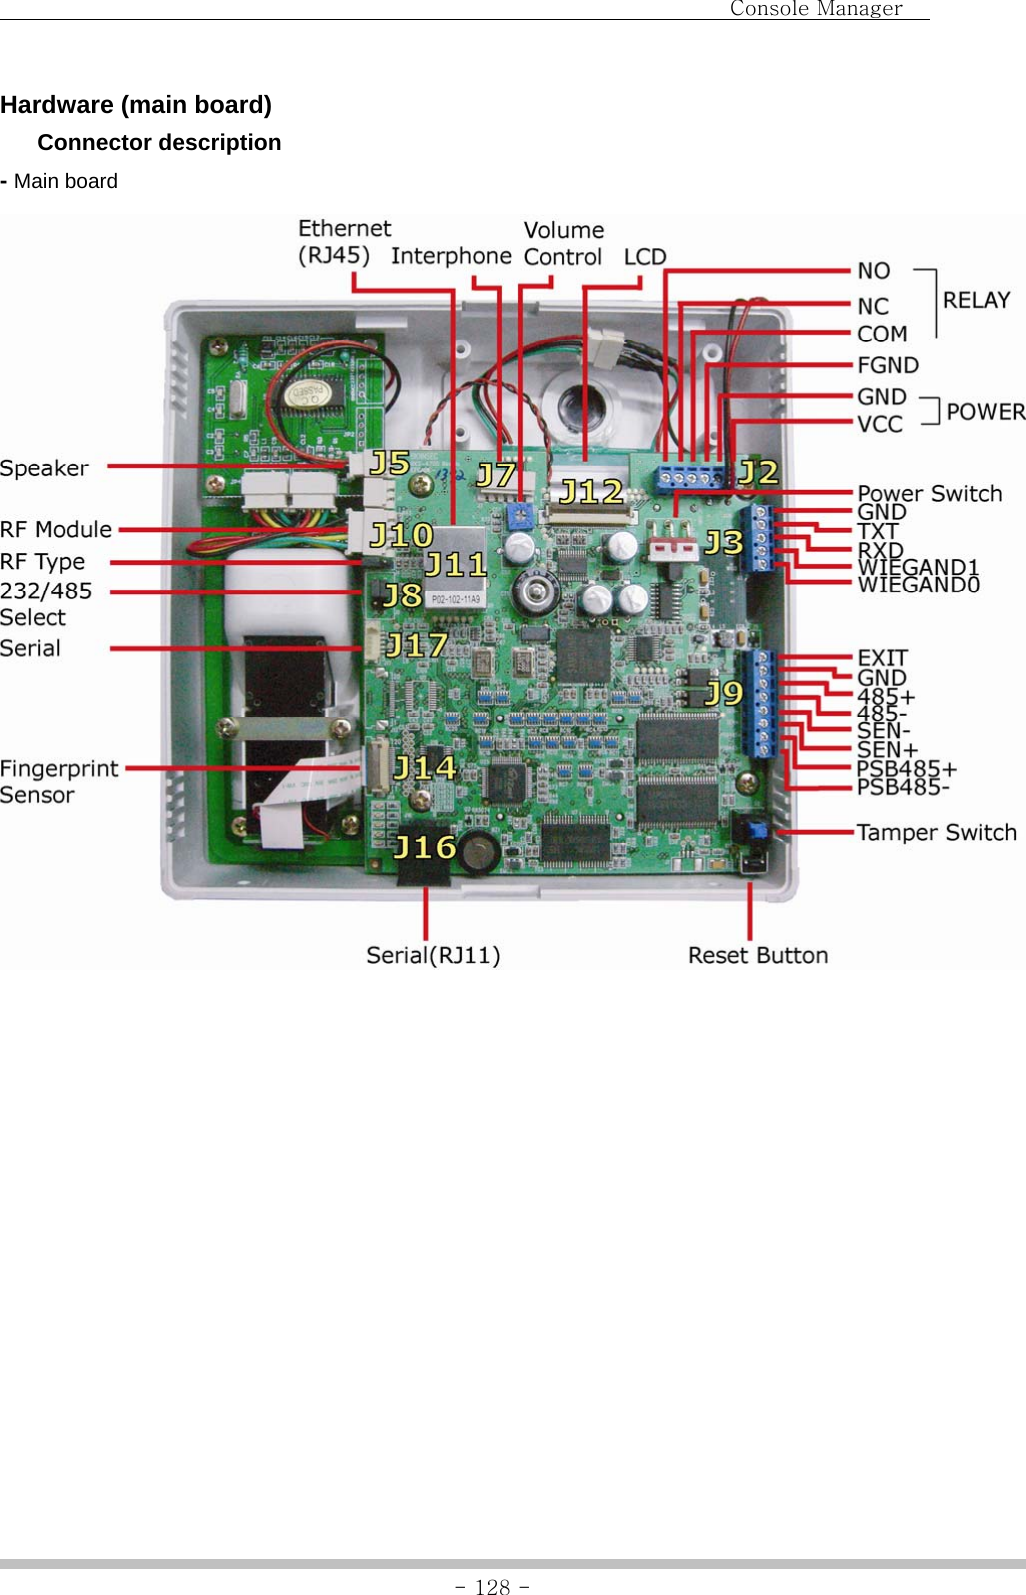                                Console Manager               - 128 -Hardware (main board)  Connector description - Main board       